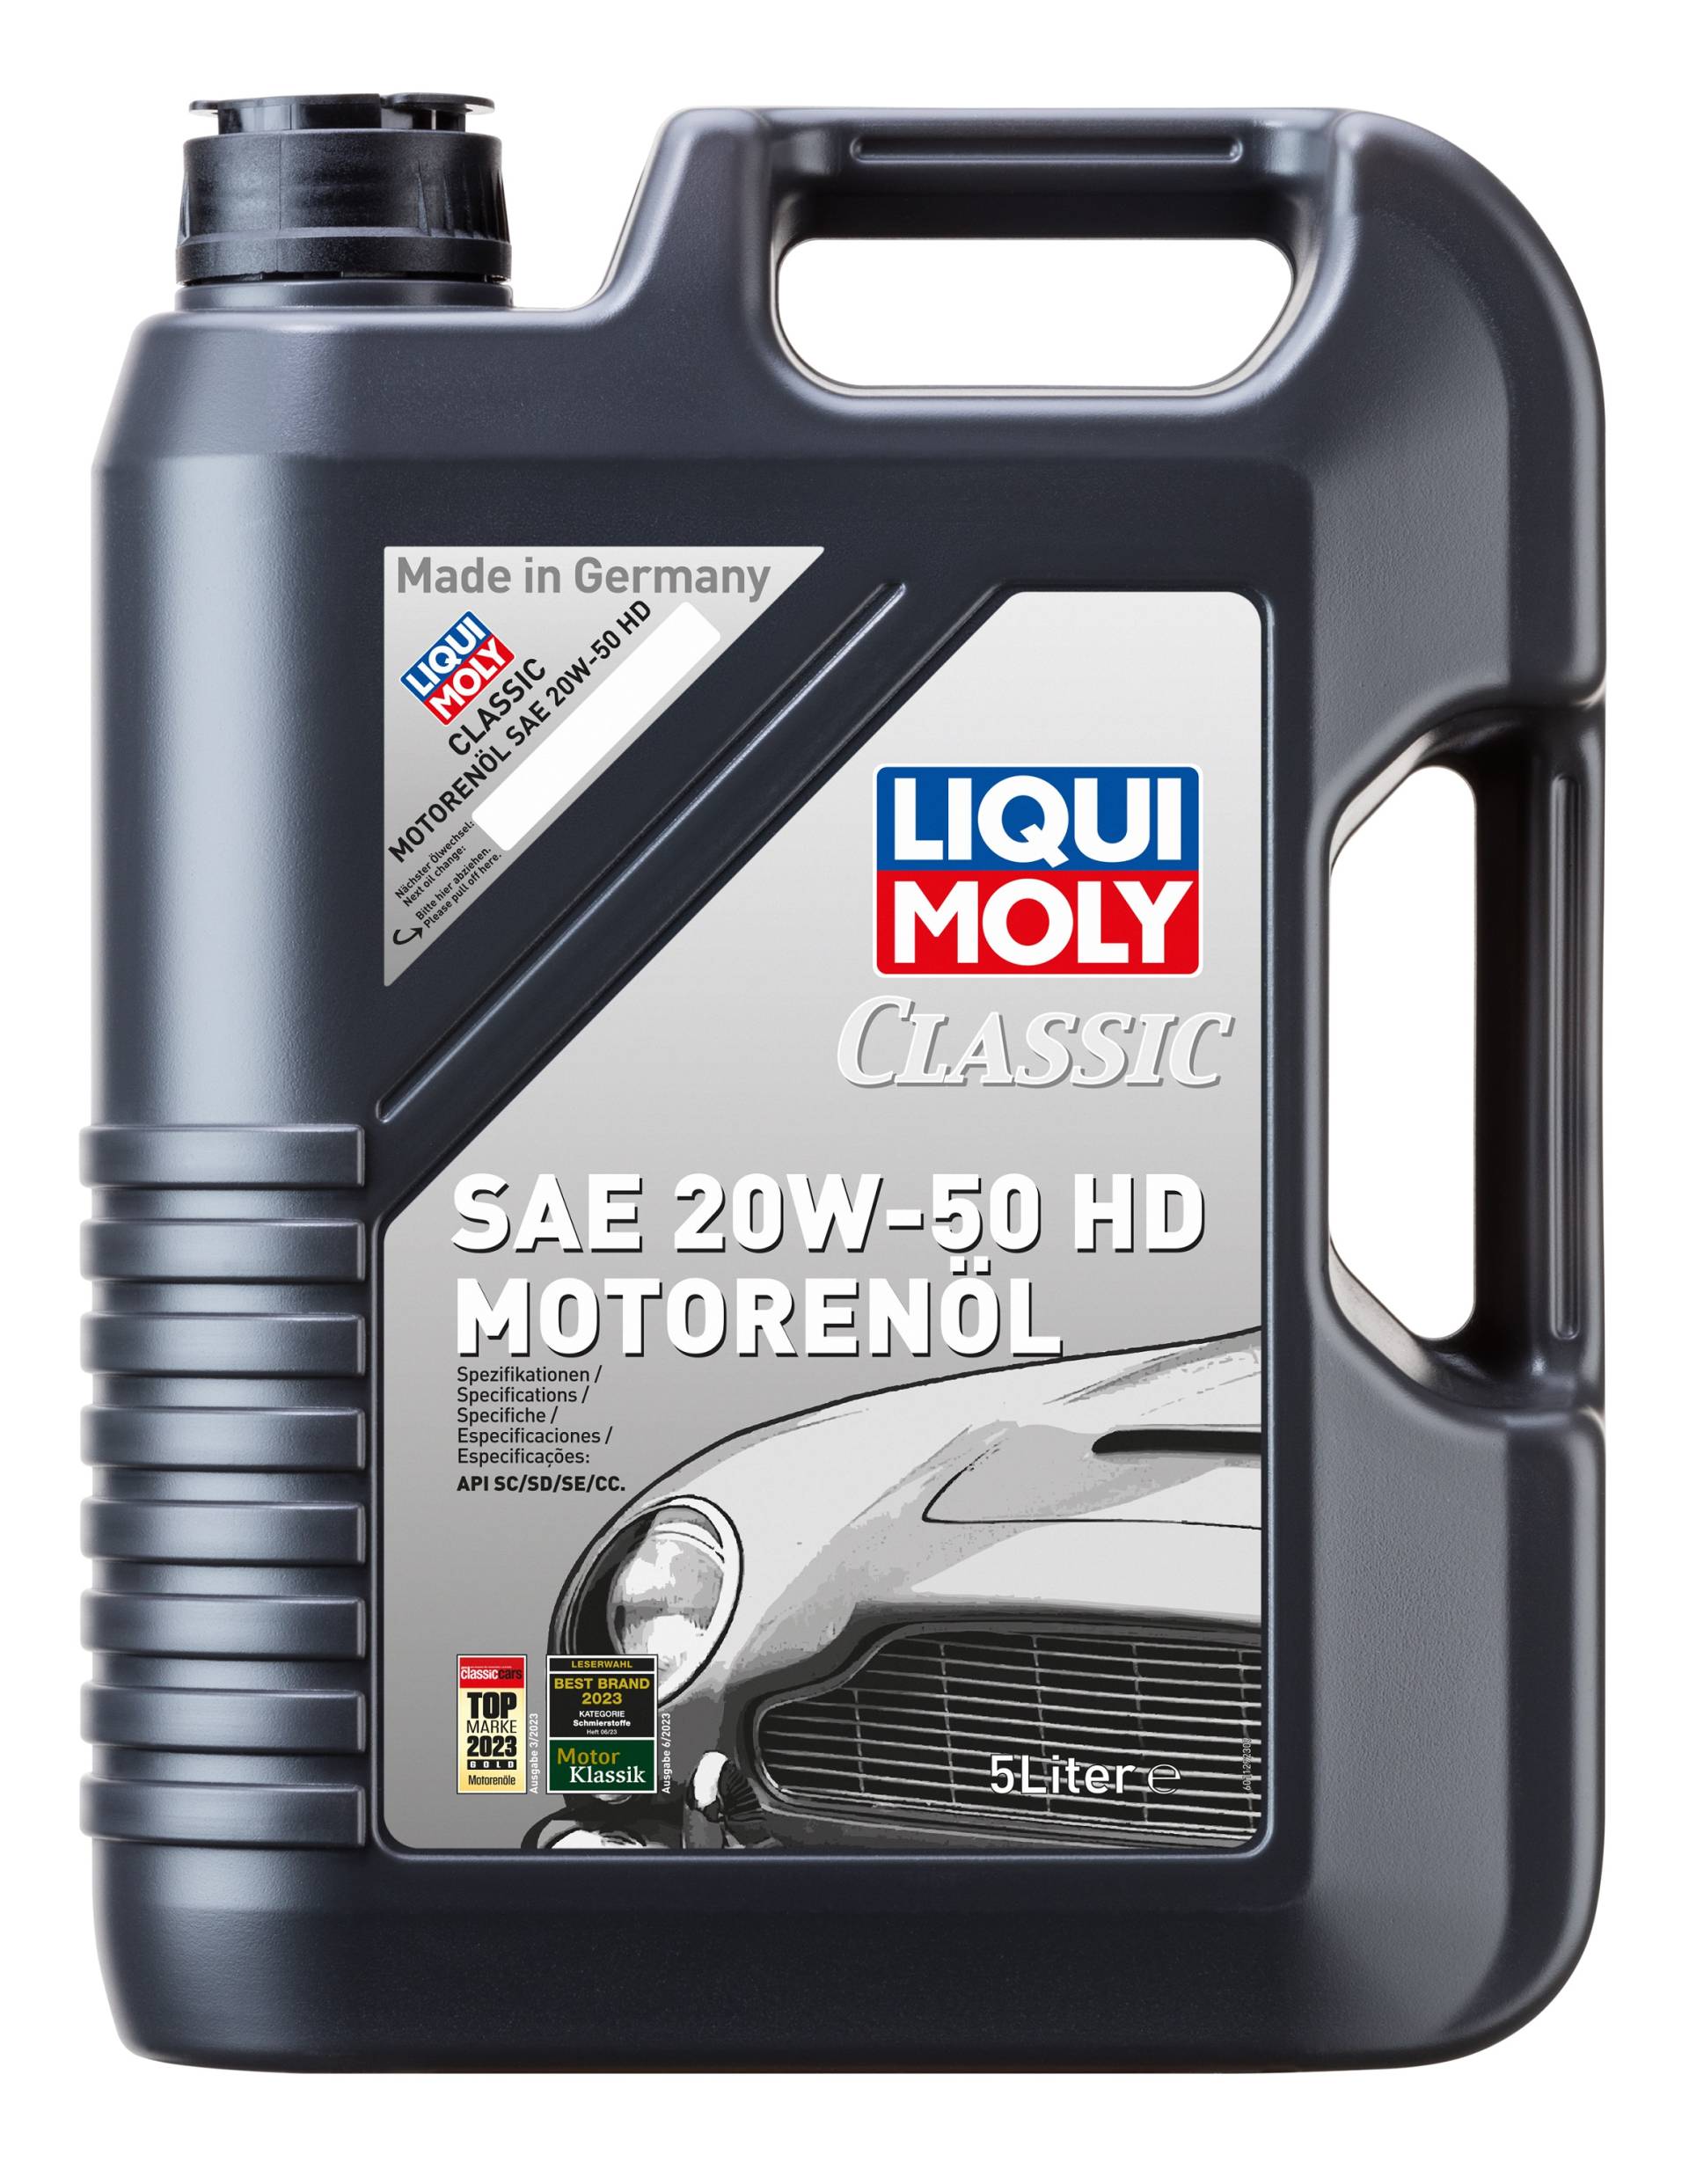 Liqui Moly Classic SAE 20W-50 HD Motoröl, 5 Liter von Liqui Moly